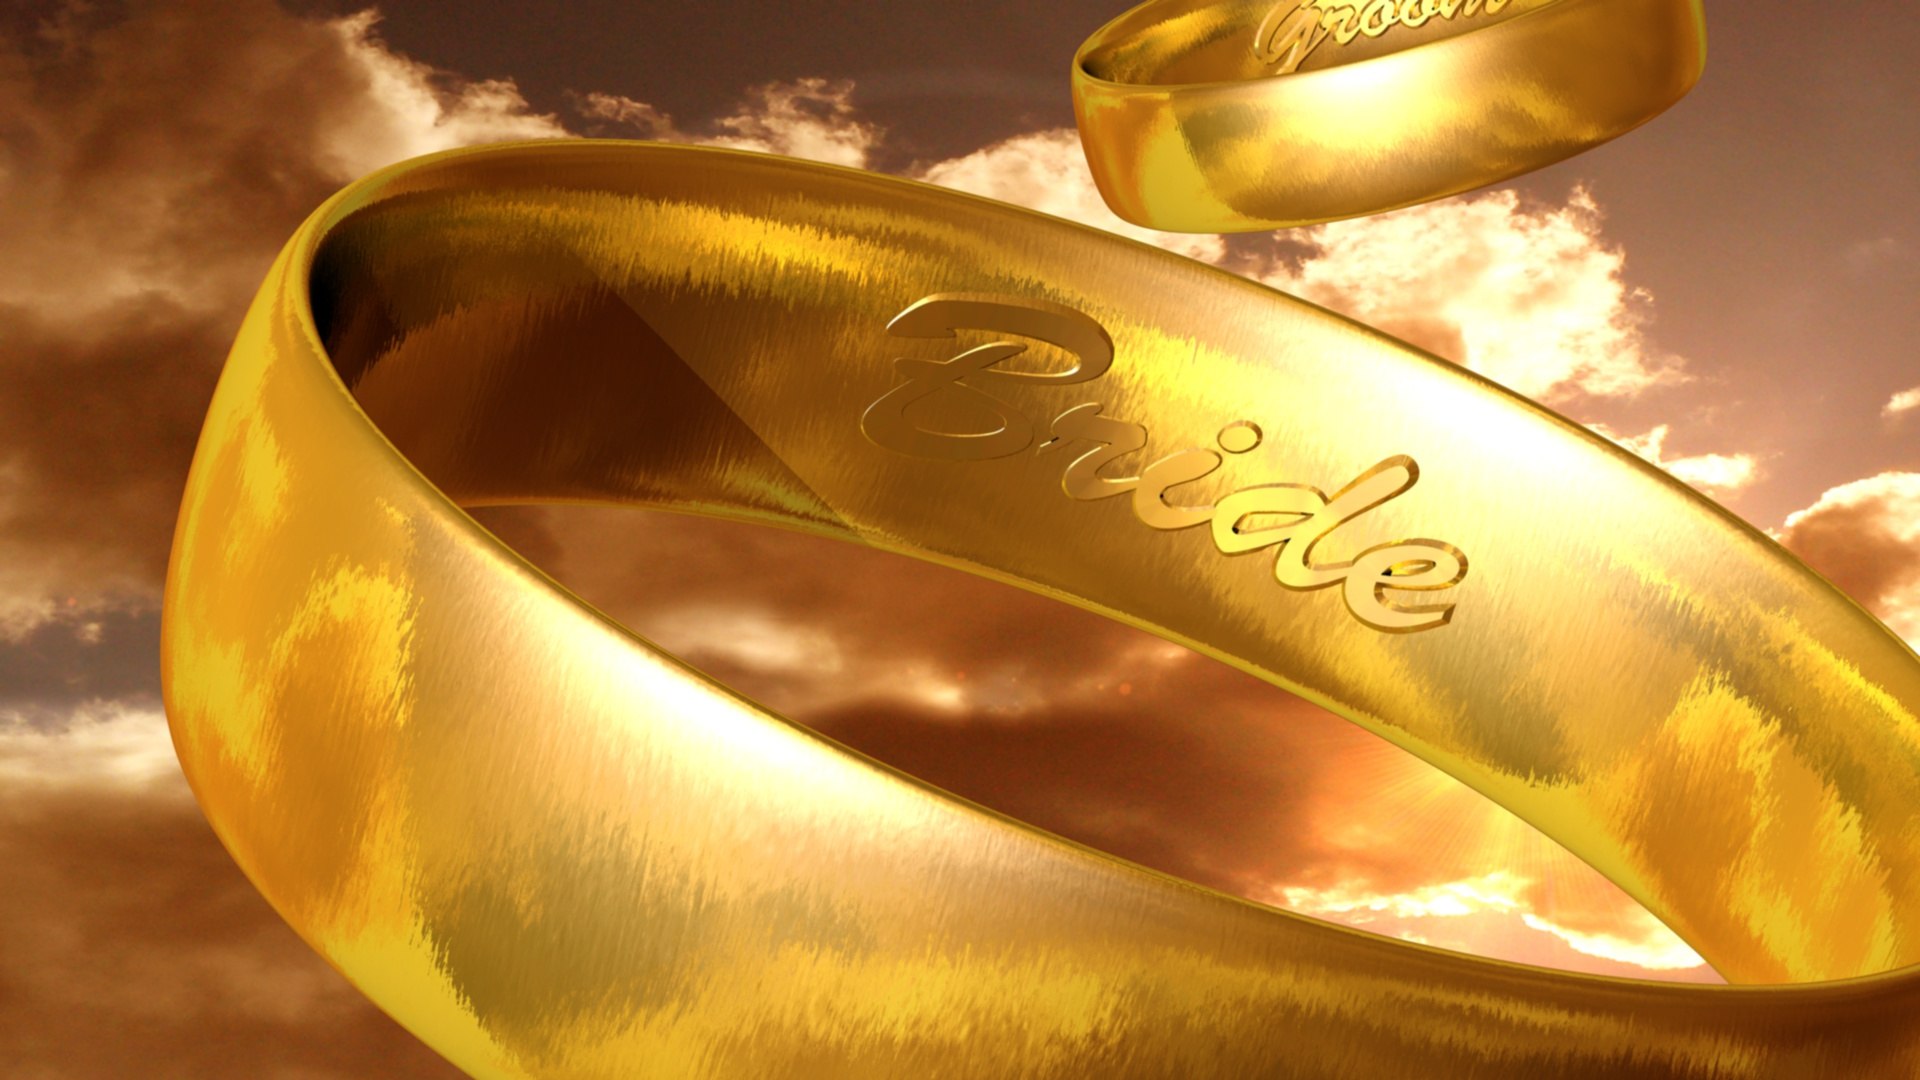 Laser_engraved_gold_wedding_ring_design_for_men_and_women_-_CJCWR007.jpg